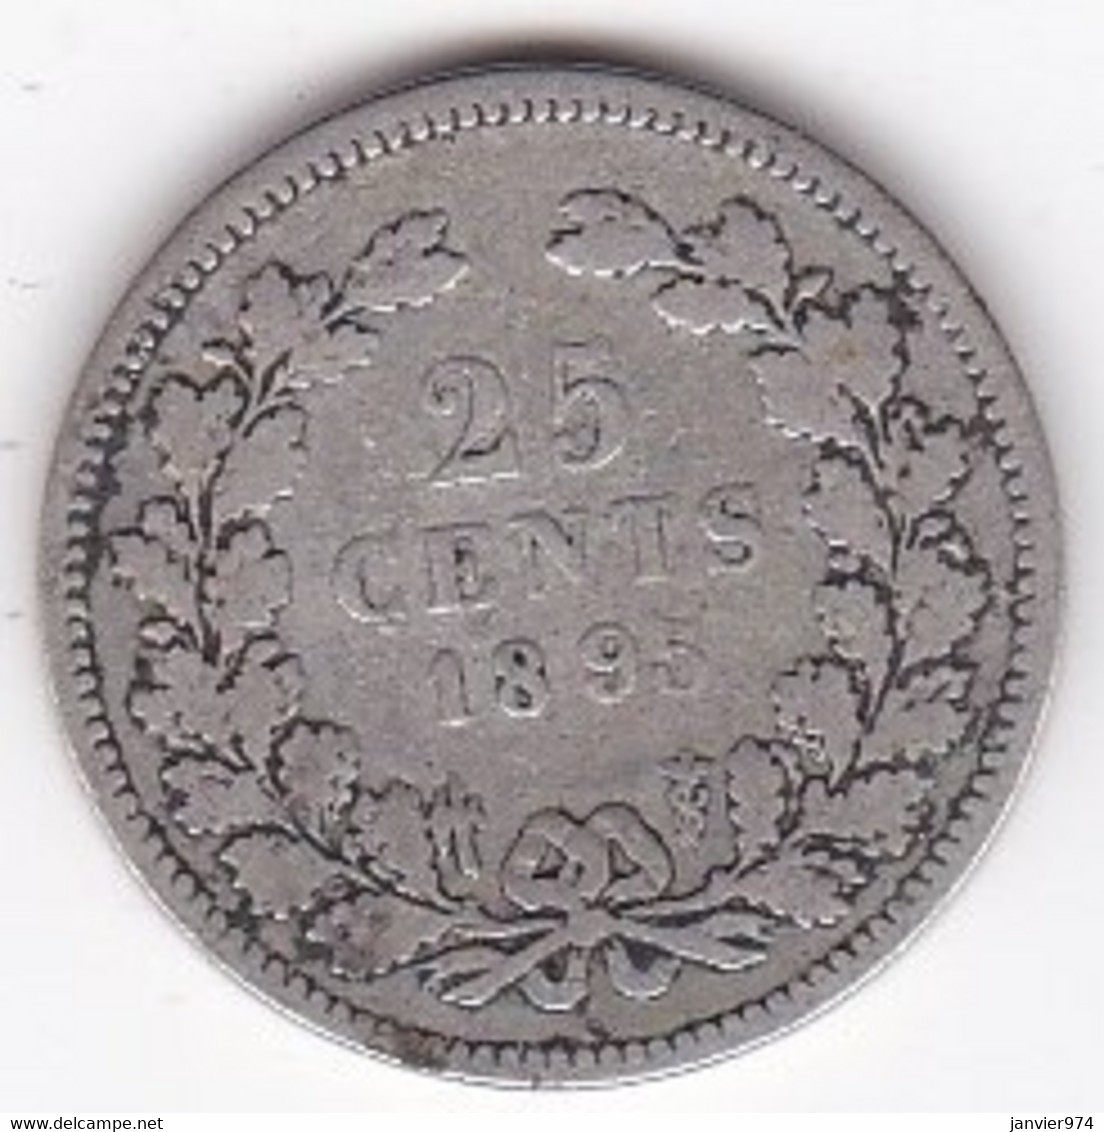 Pays Bas 25 Cents 1895. Wilhelmina I. Argent. KM# 115 - 25 Cent